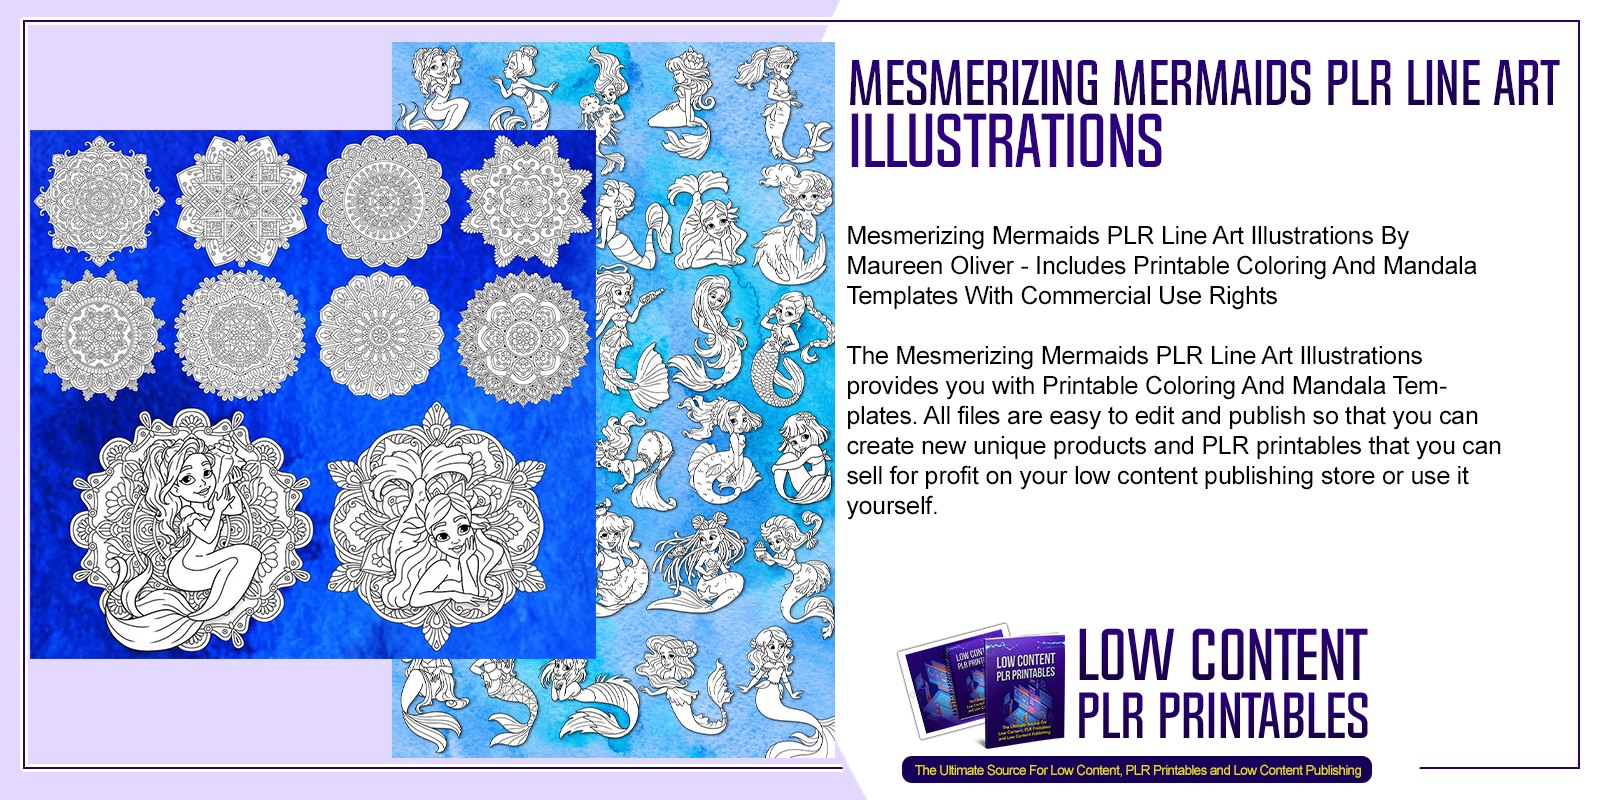 Mesmerizing Mermaids PLR Line Art Illustrations